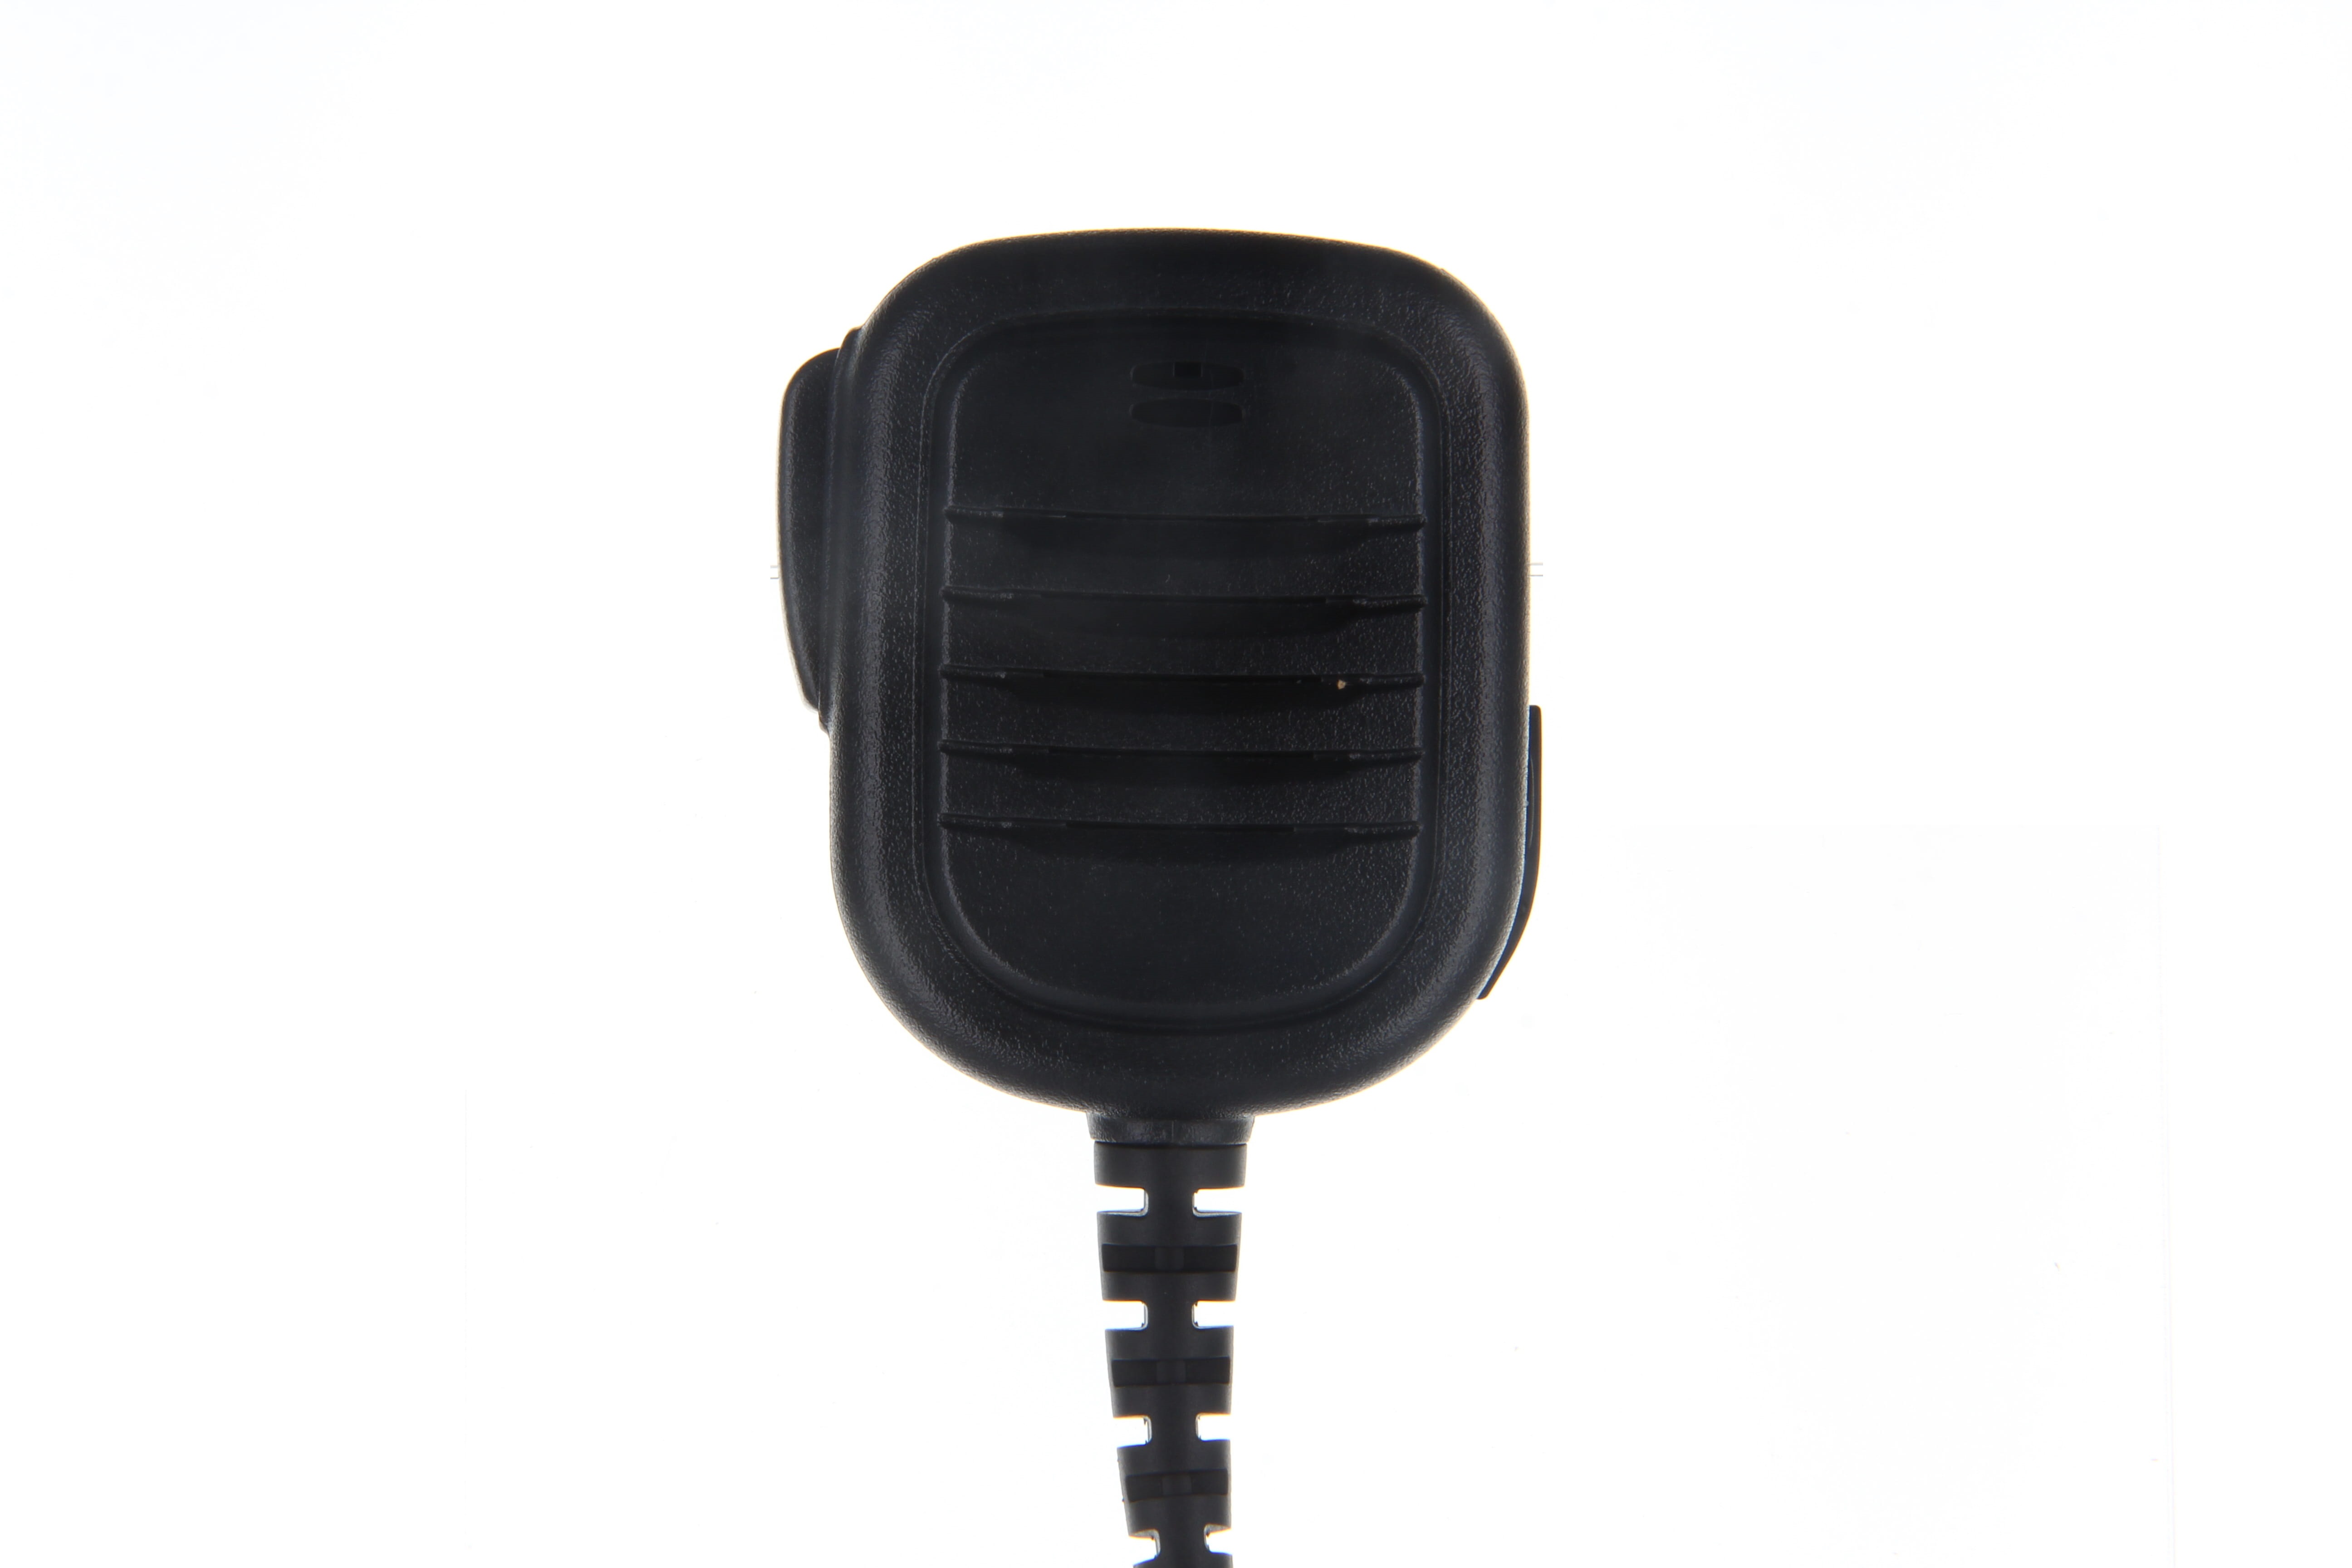 CoPacks Lautsprechermikrofon GE-XM02E passend für Sepura STP8000, STP9000